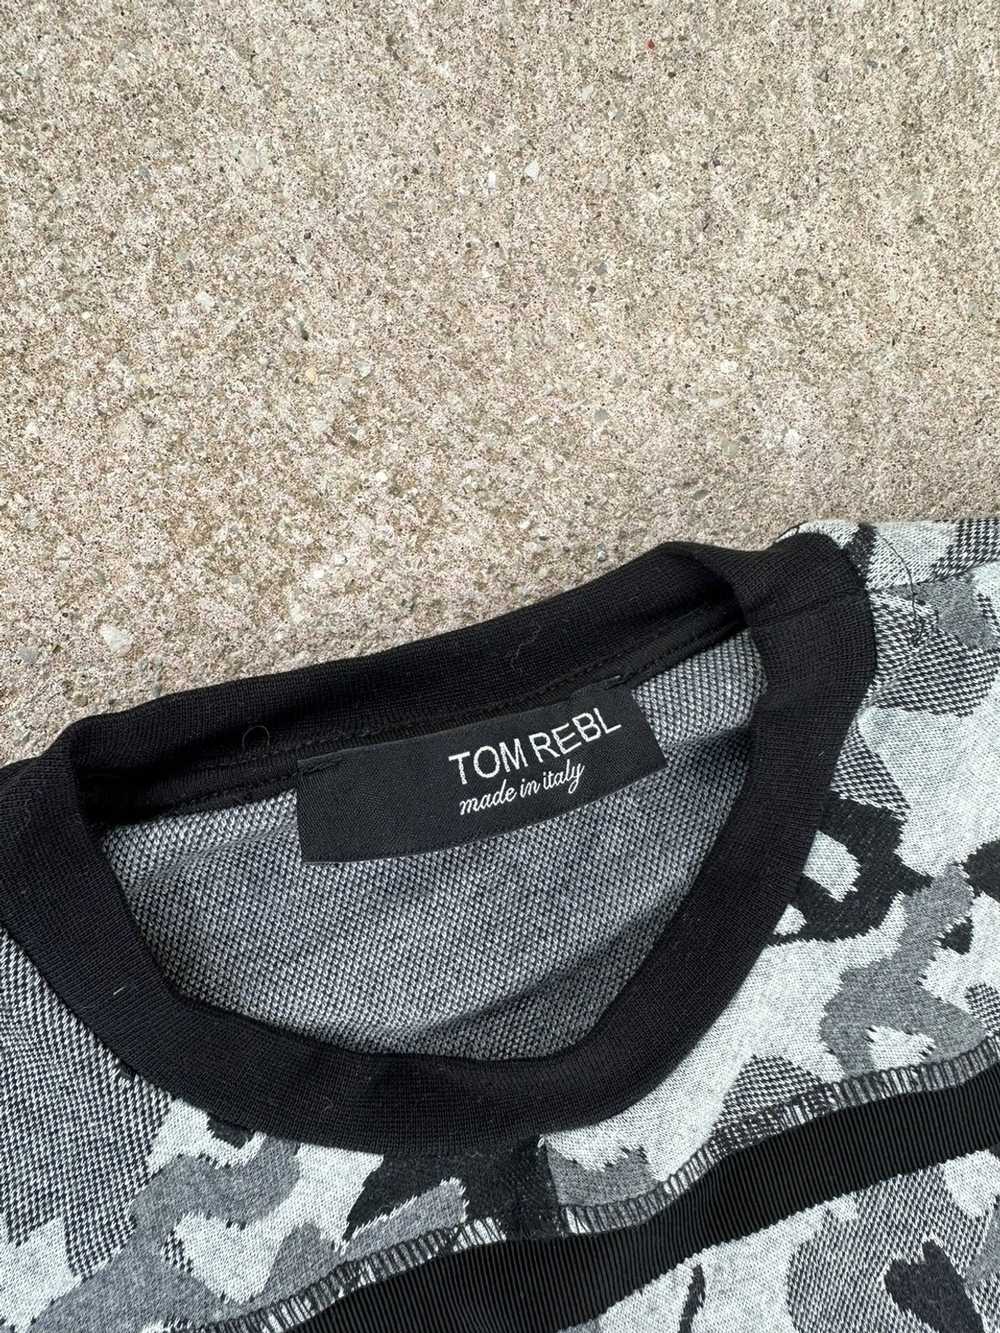 Tom Rebl Tom Rebl Crewneck Sweatshirt Grey - image 4